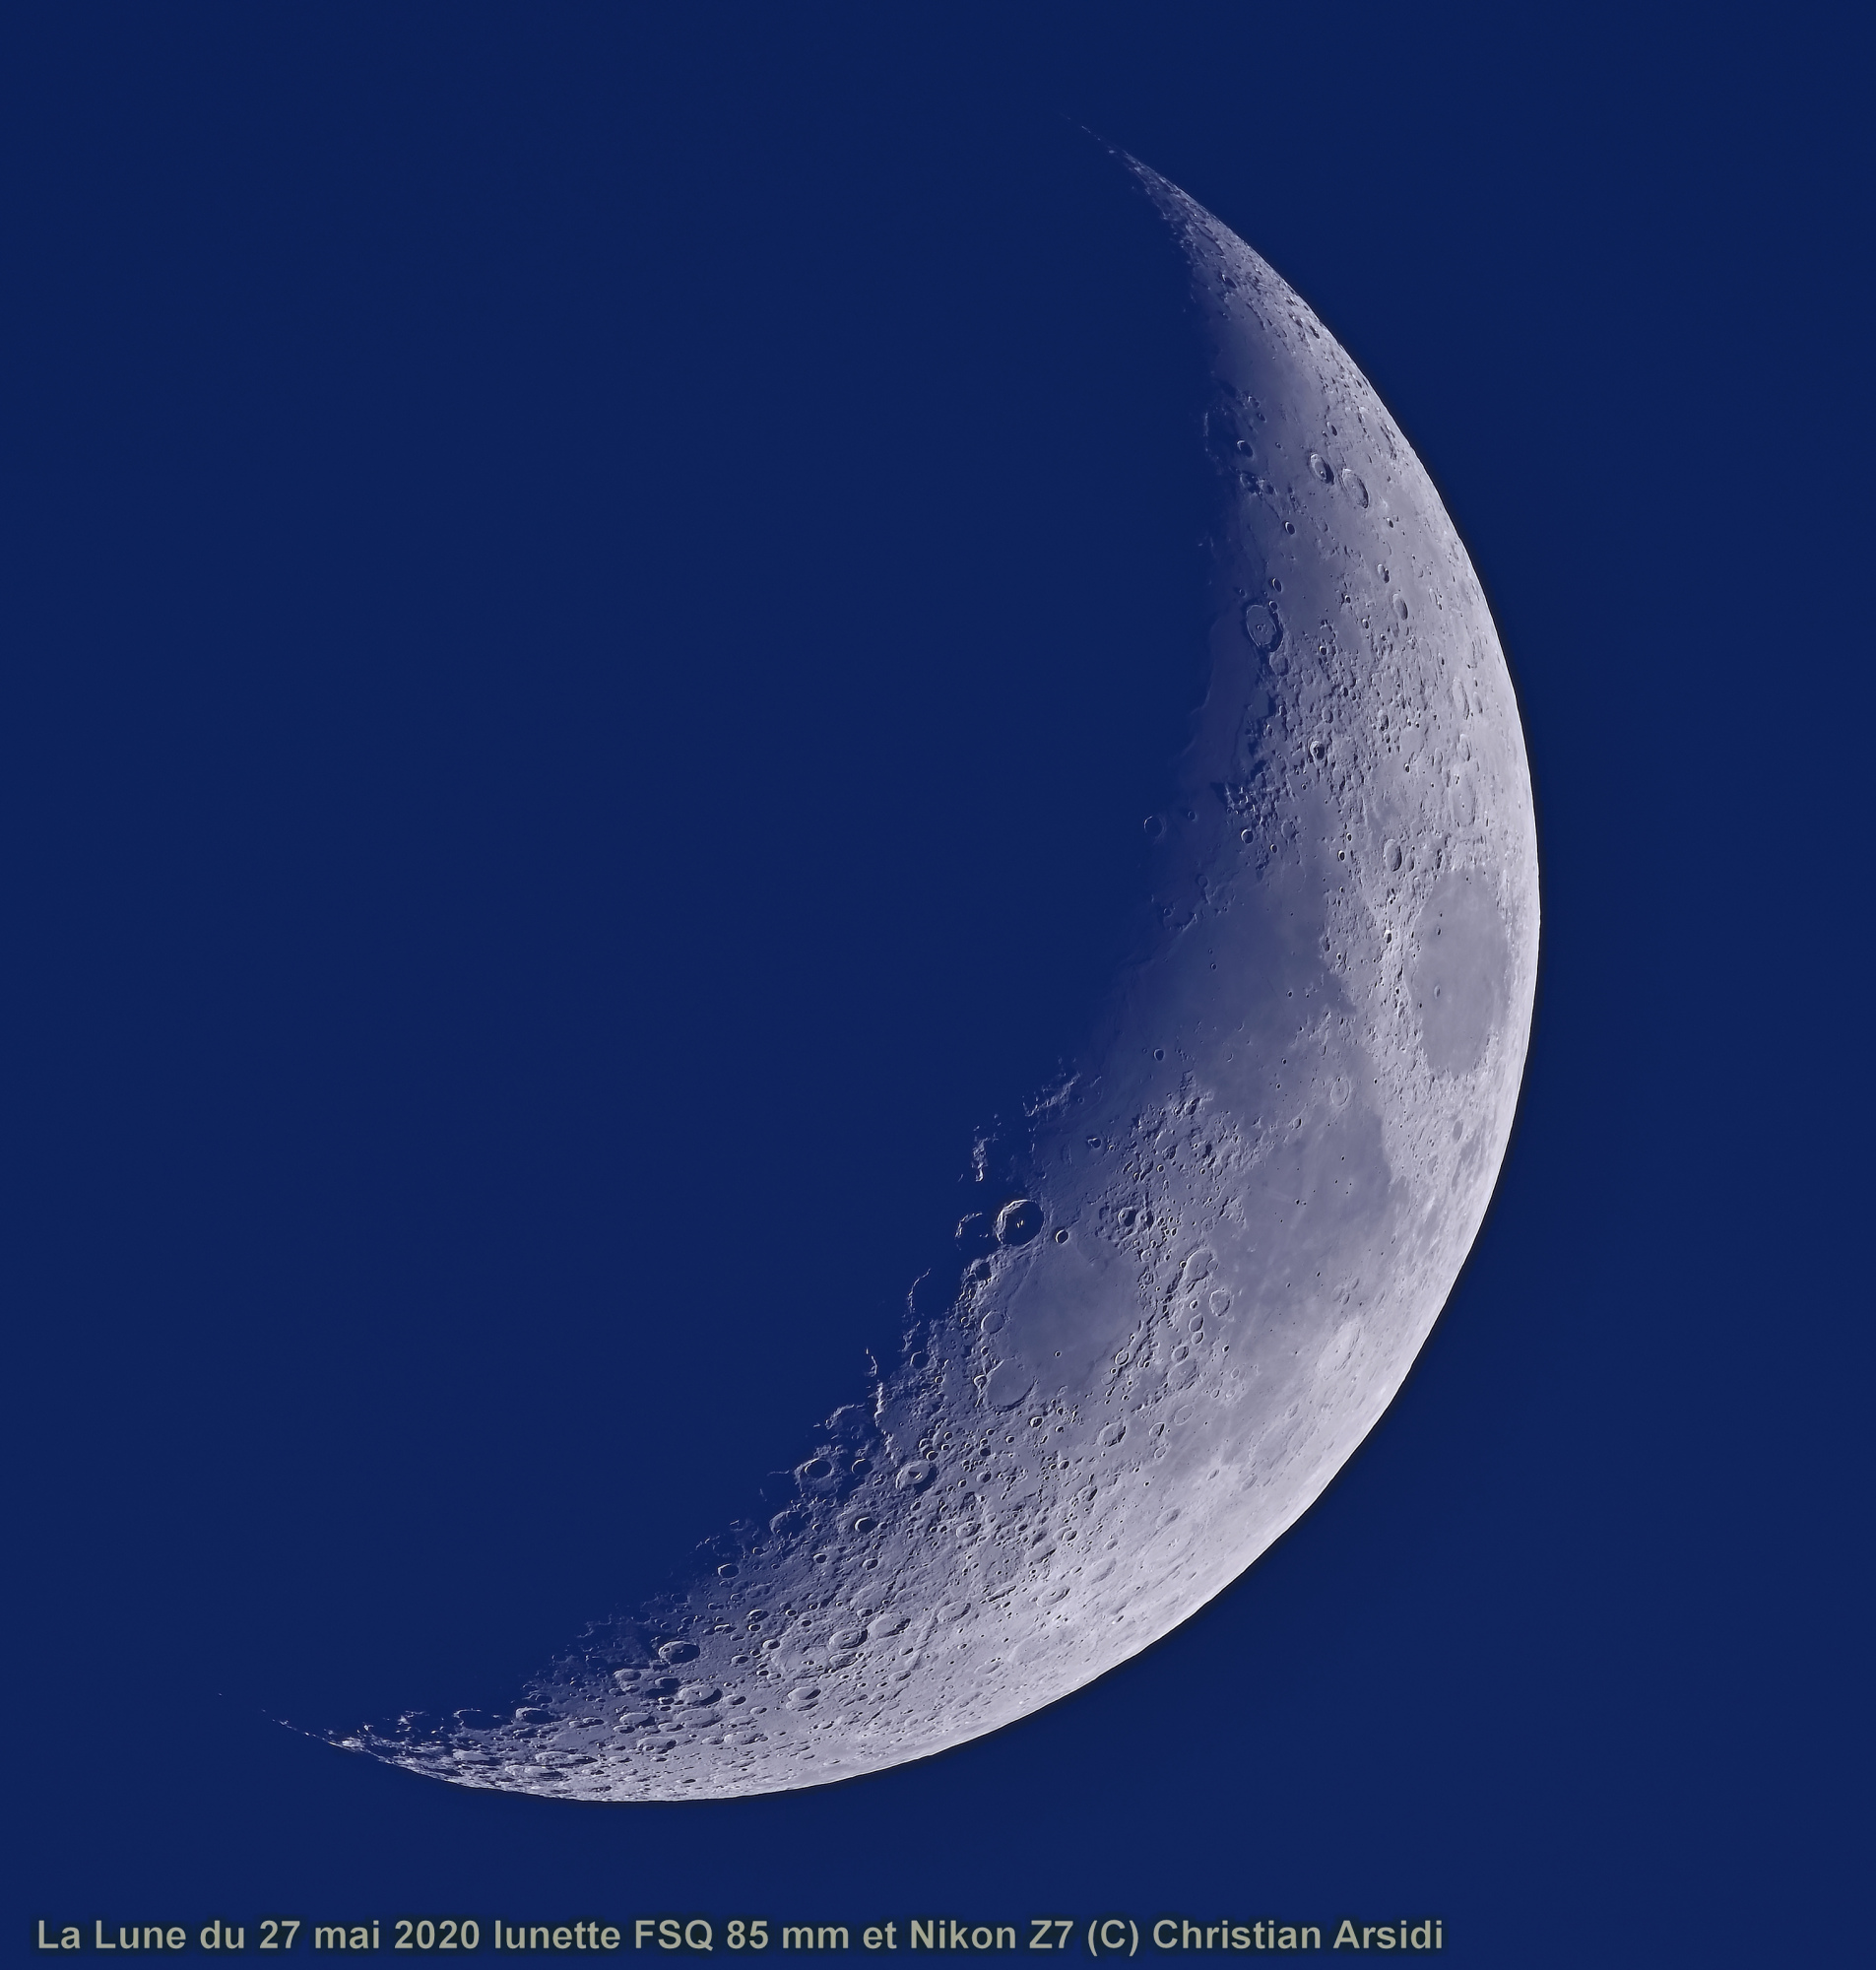 La Lune 25 images 92% TTB V2 Jpeg.jpg